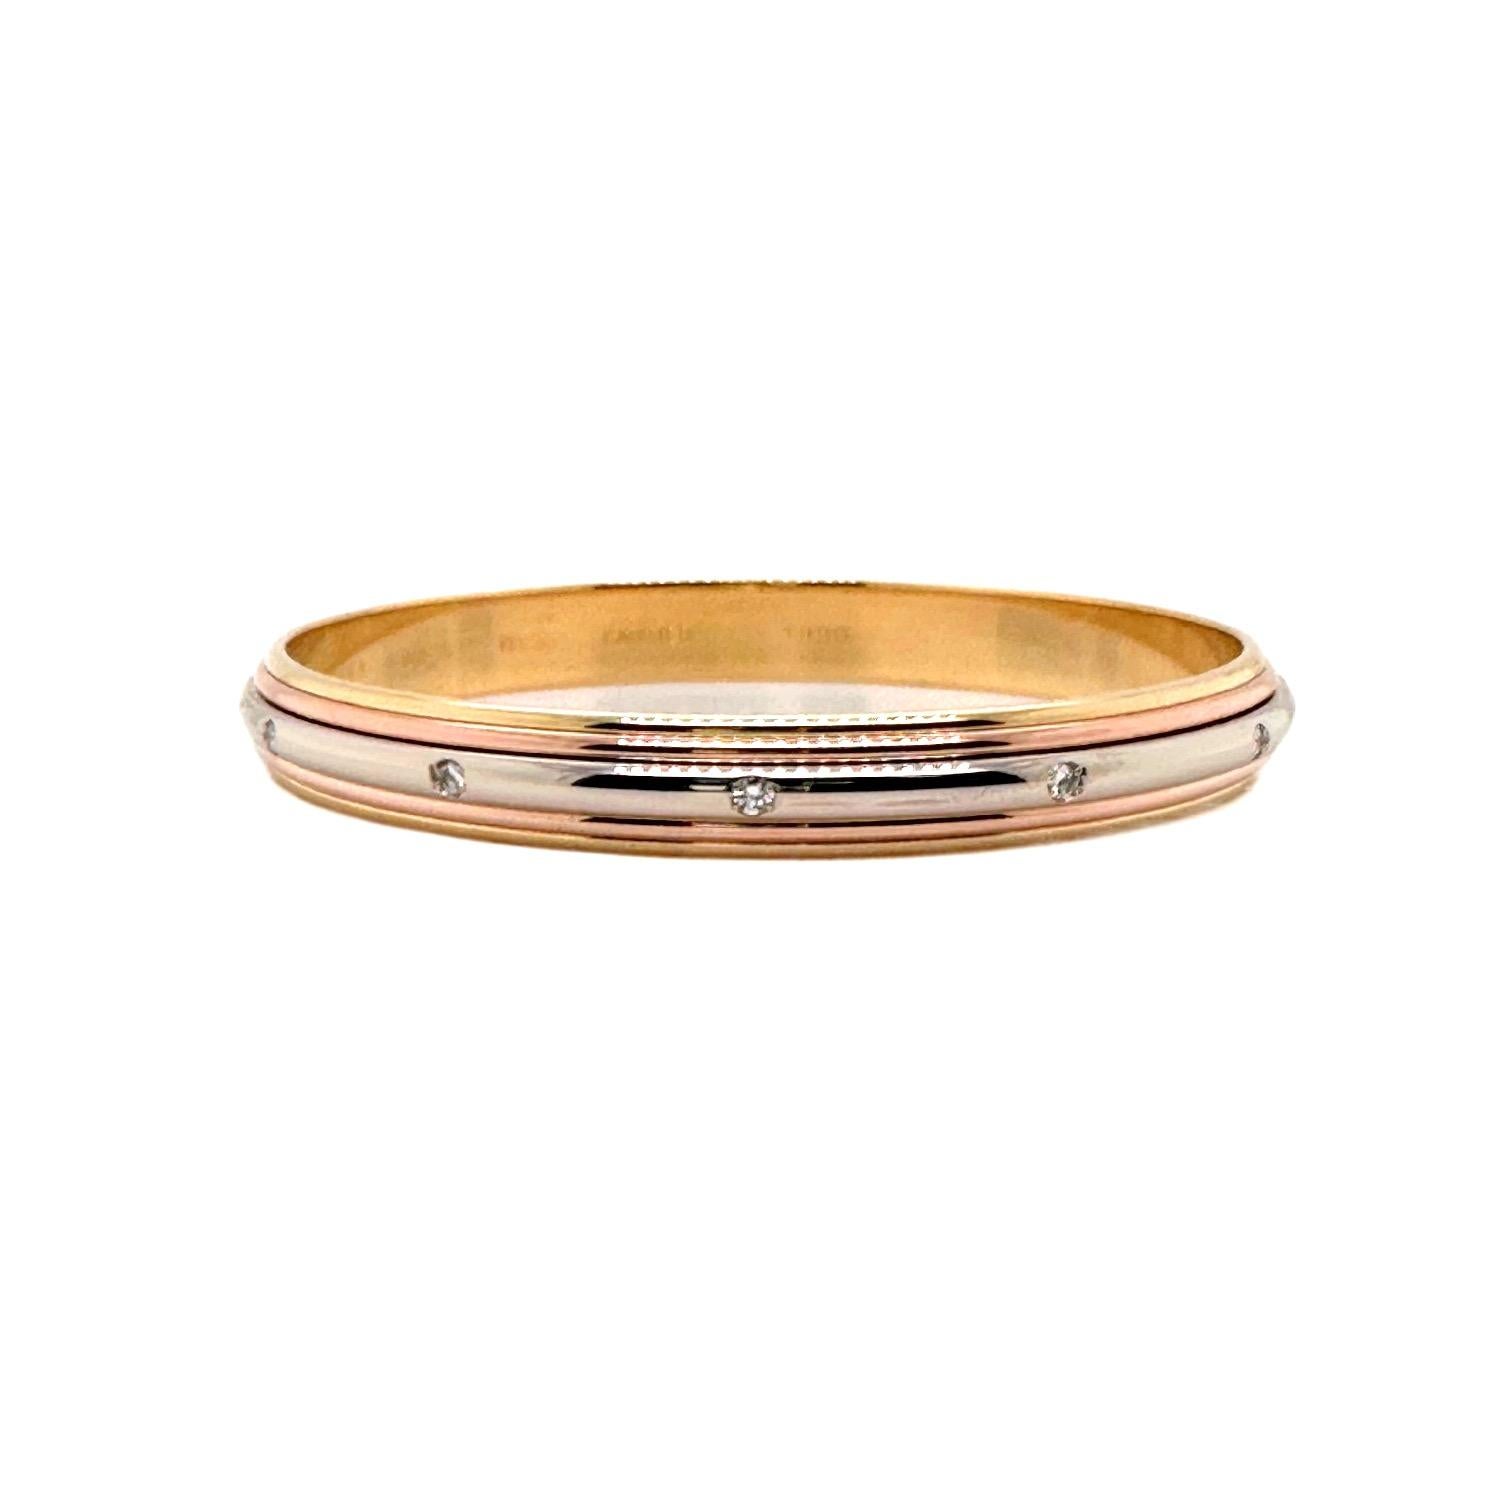 Cartier Saturne Collection Multi-Tone Gold Diamond Armreif Armband
Stil:  Armreif
Referenznummer:   B46468
Metall:   Mehrfarbig 18kt Weiß-Gelb-Roségold 52,2 Gramm
Größe:  7,5' Innenmaß,  2,5' Zoll Länge, 8,5 mm Breite
Diamanten:  12 runde Brillanten